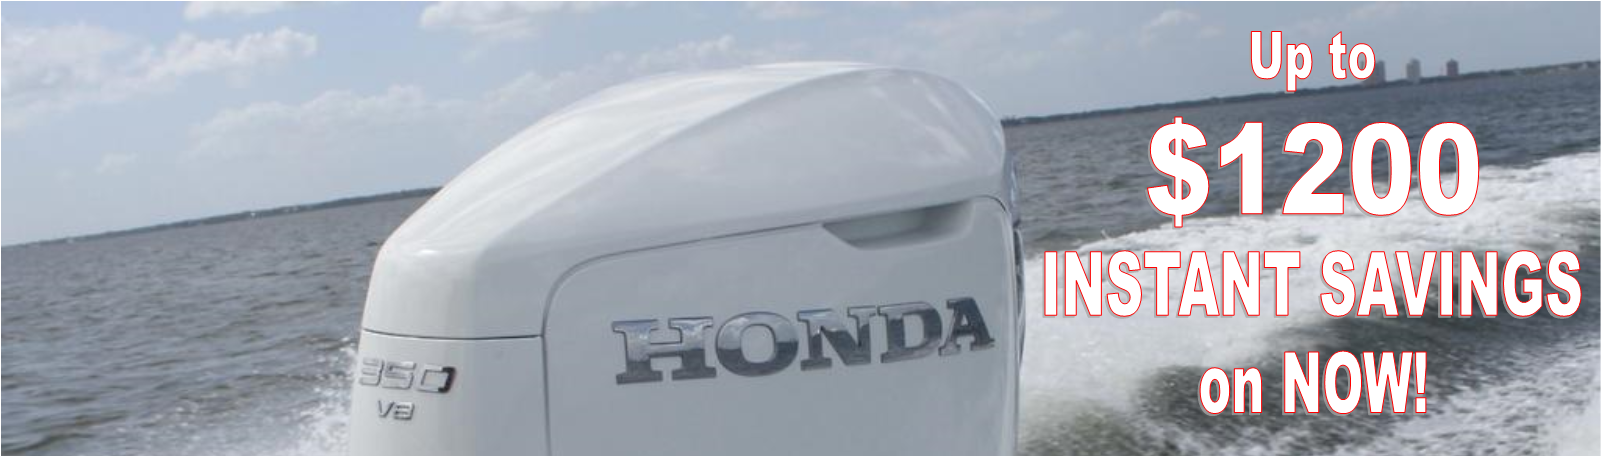 Honda Outboard Sale